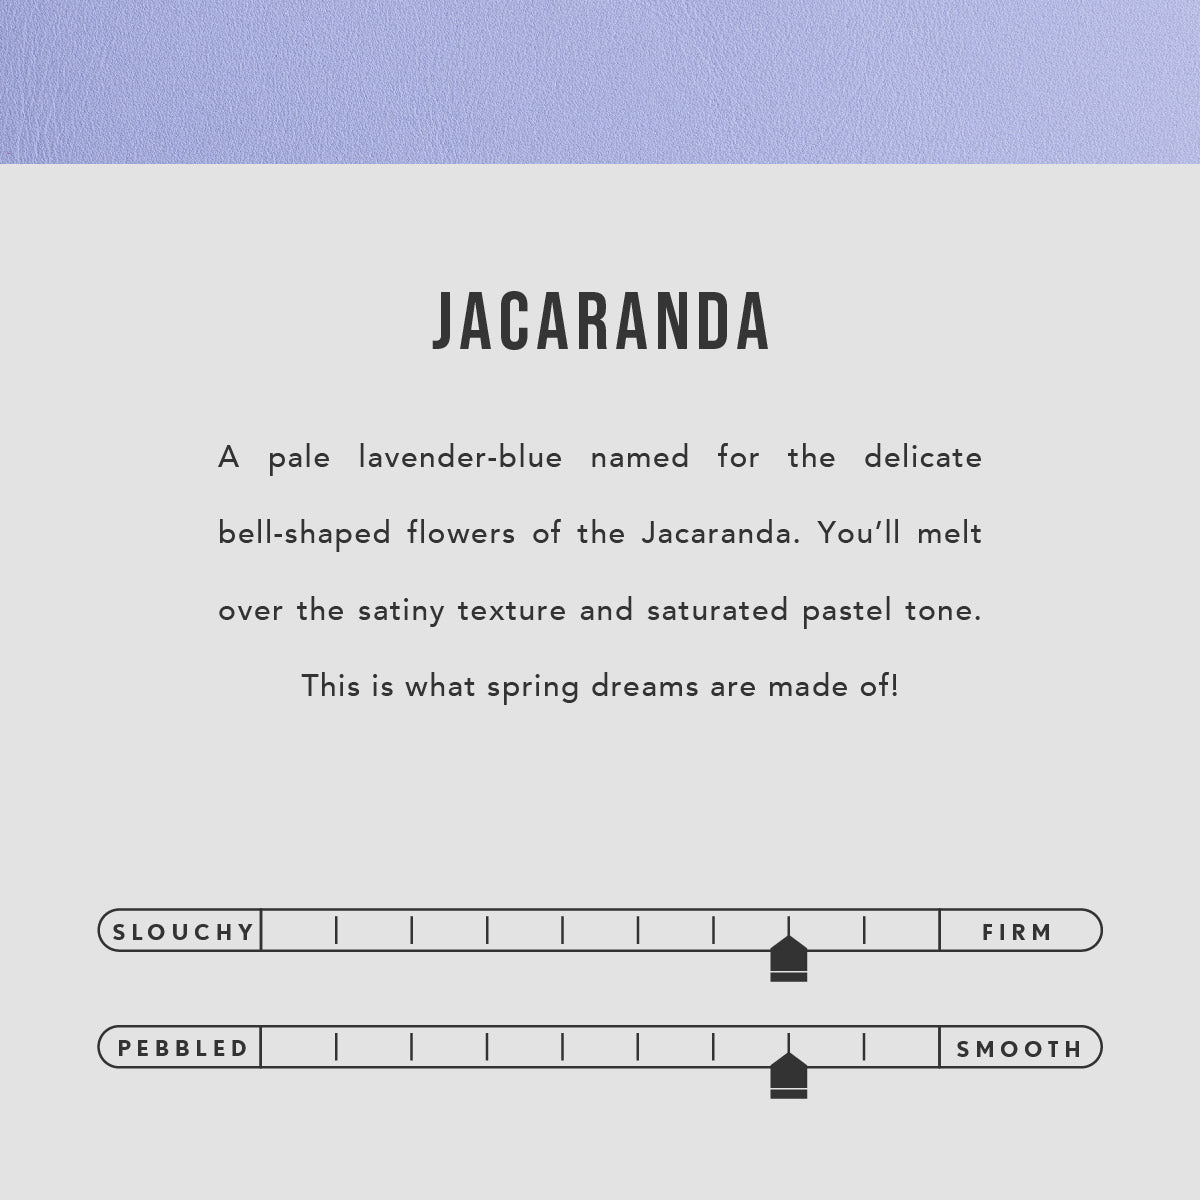 Jacaranda | infographic